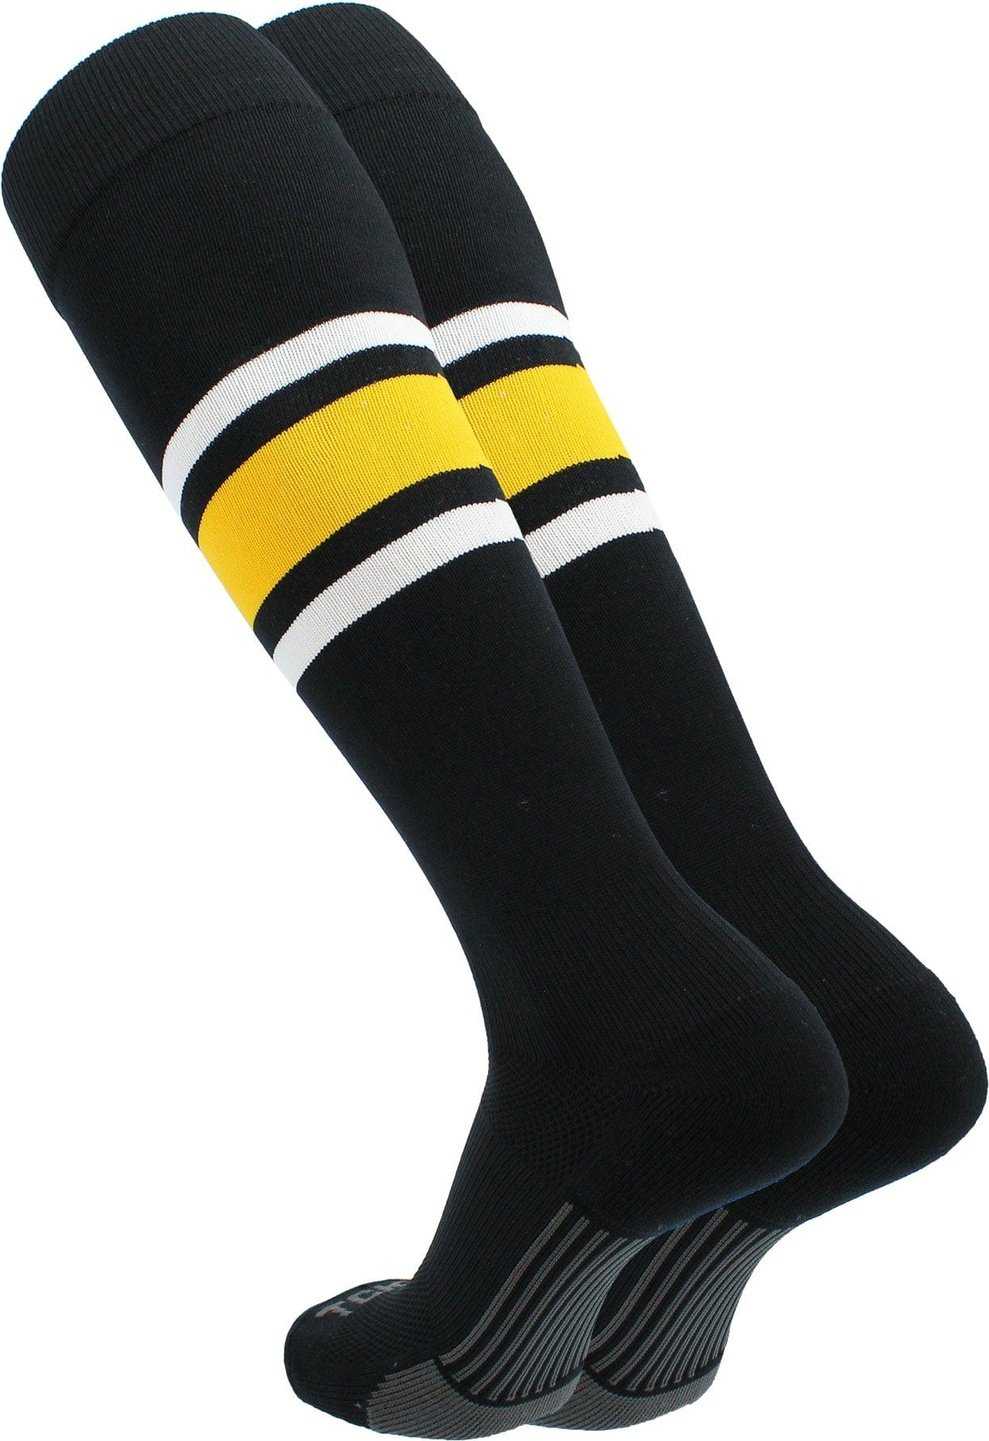 TCK Dugout Knee High Socks - Black White Gold - HIT a Double - 2